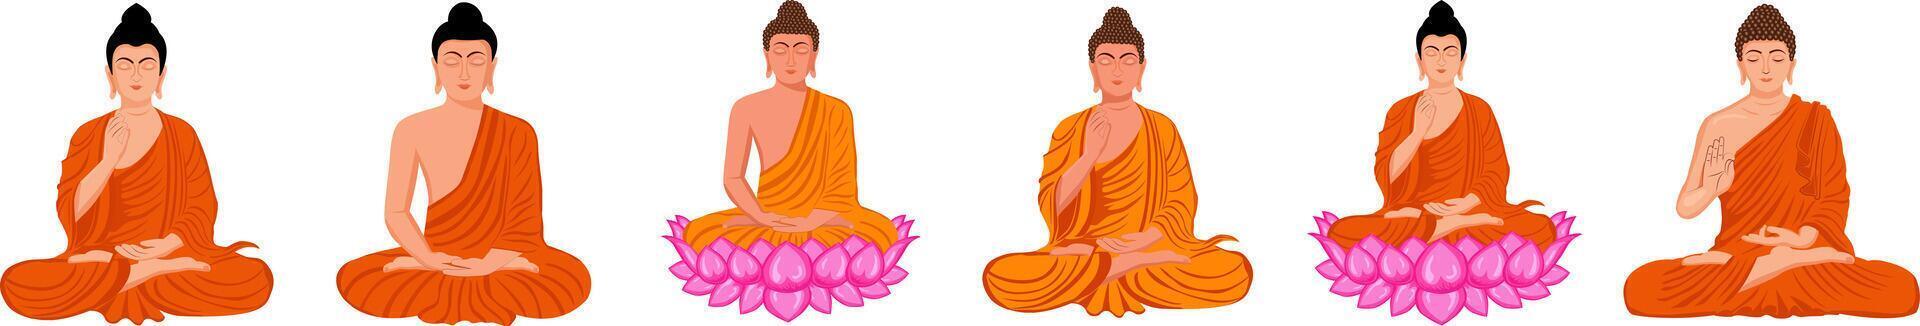 heer gautama Boeddha illustratie voor gelukkig Boeddha purnima, vesak dag sociaal media post , web banier vector